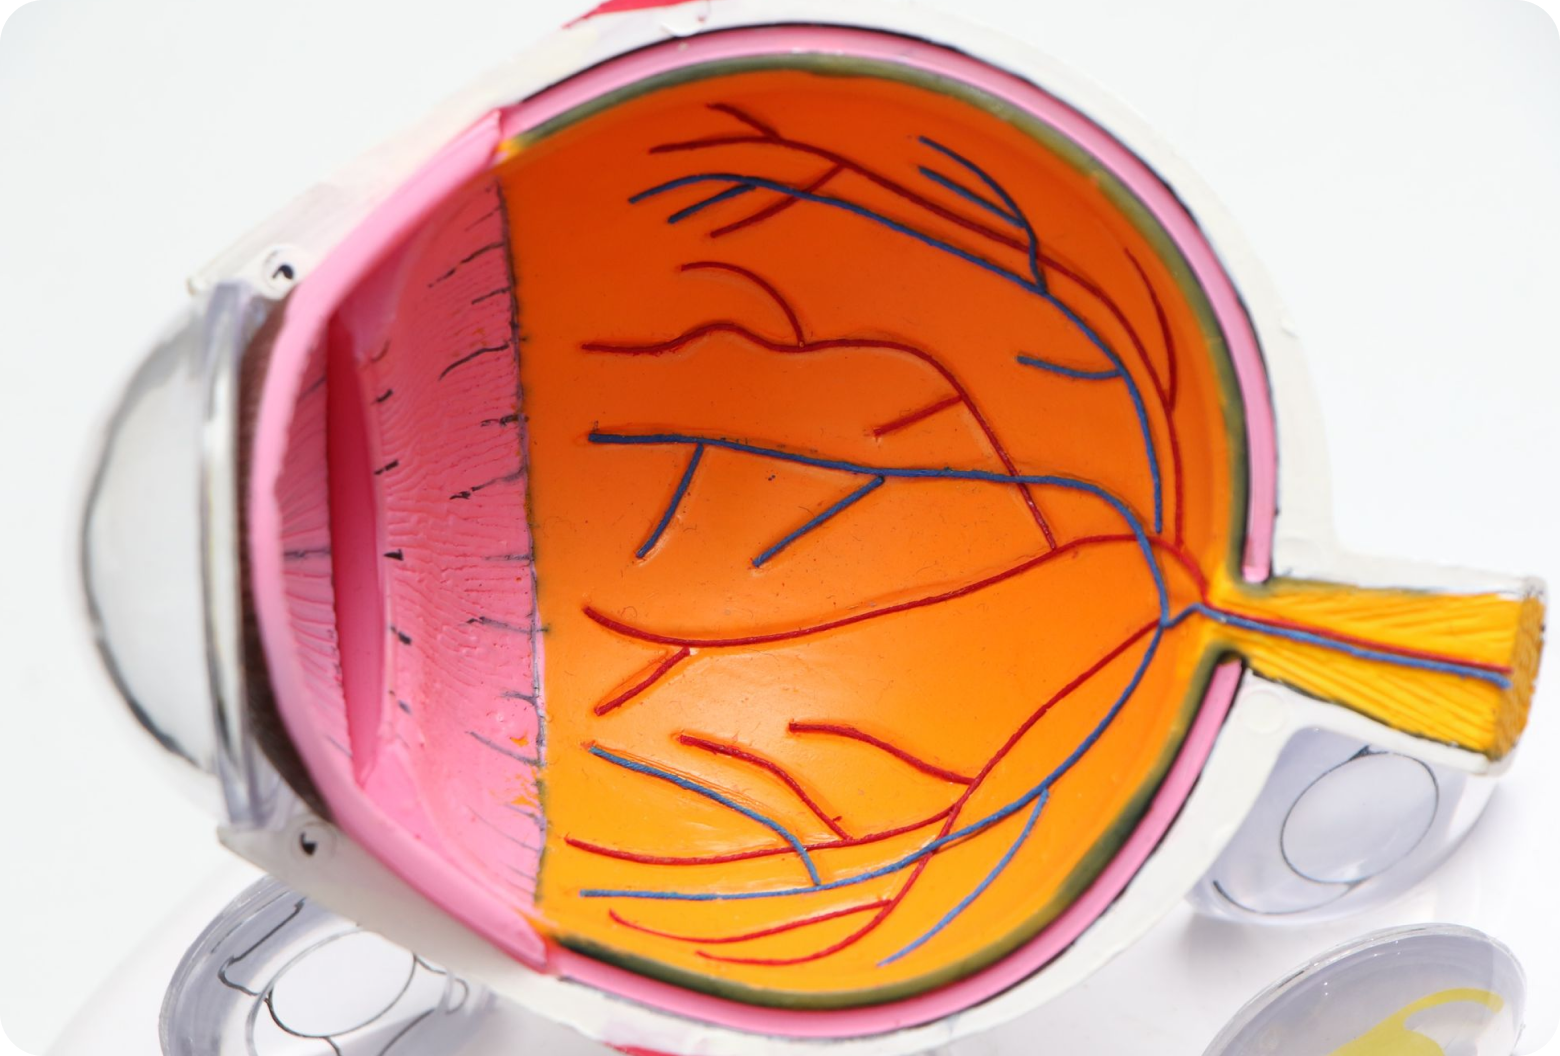 Anatomical illustration of the eye including nerves and blood vessels